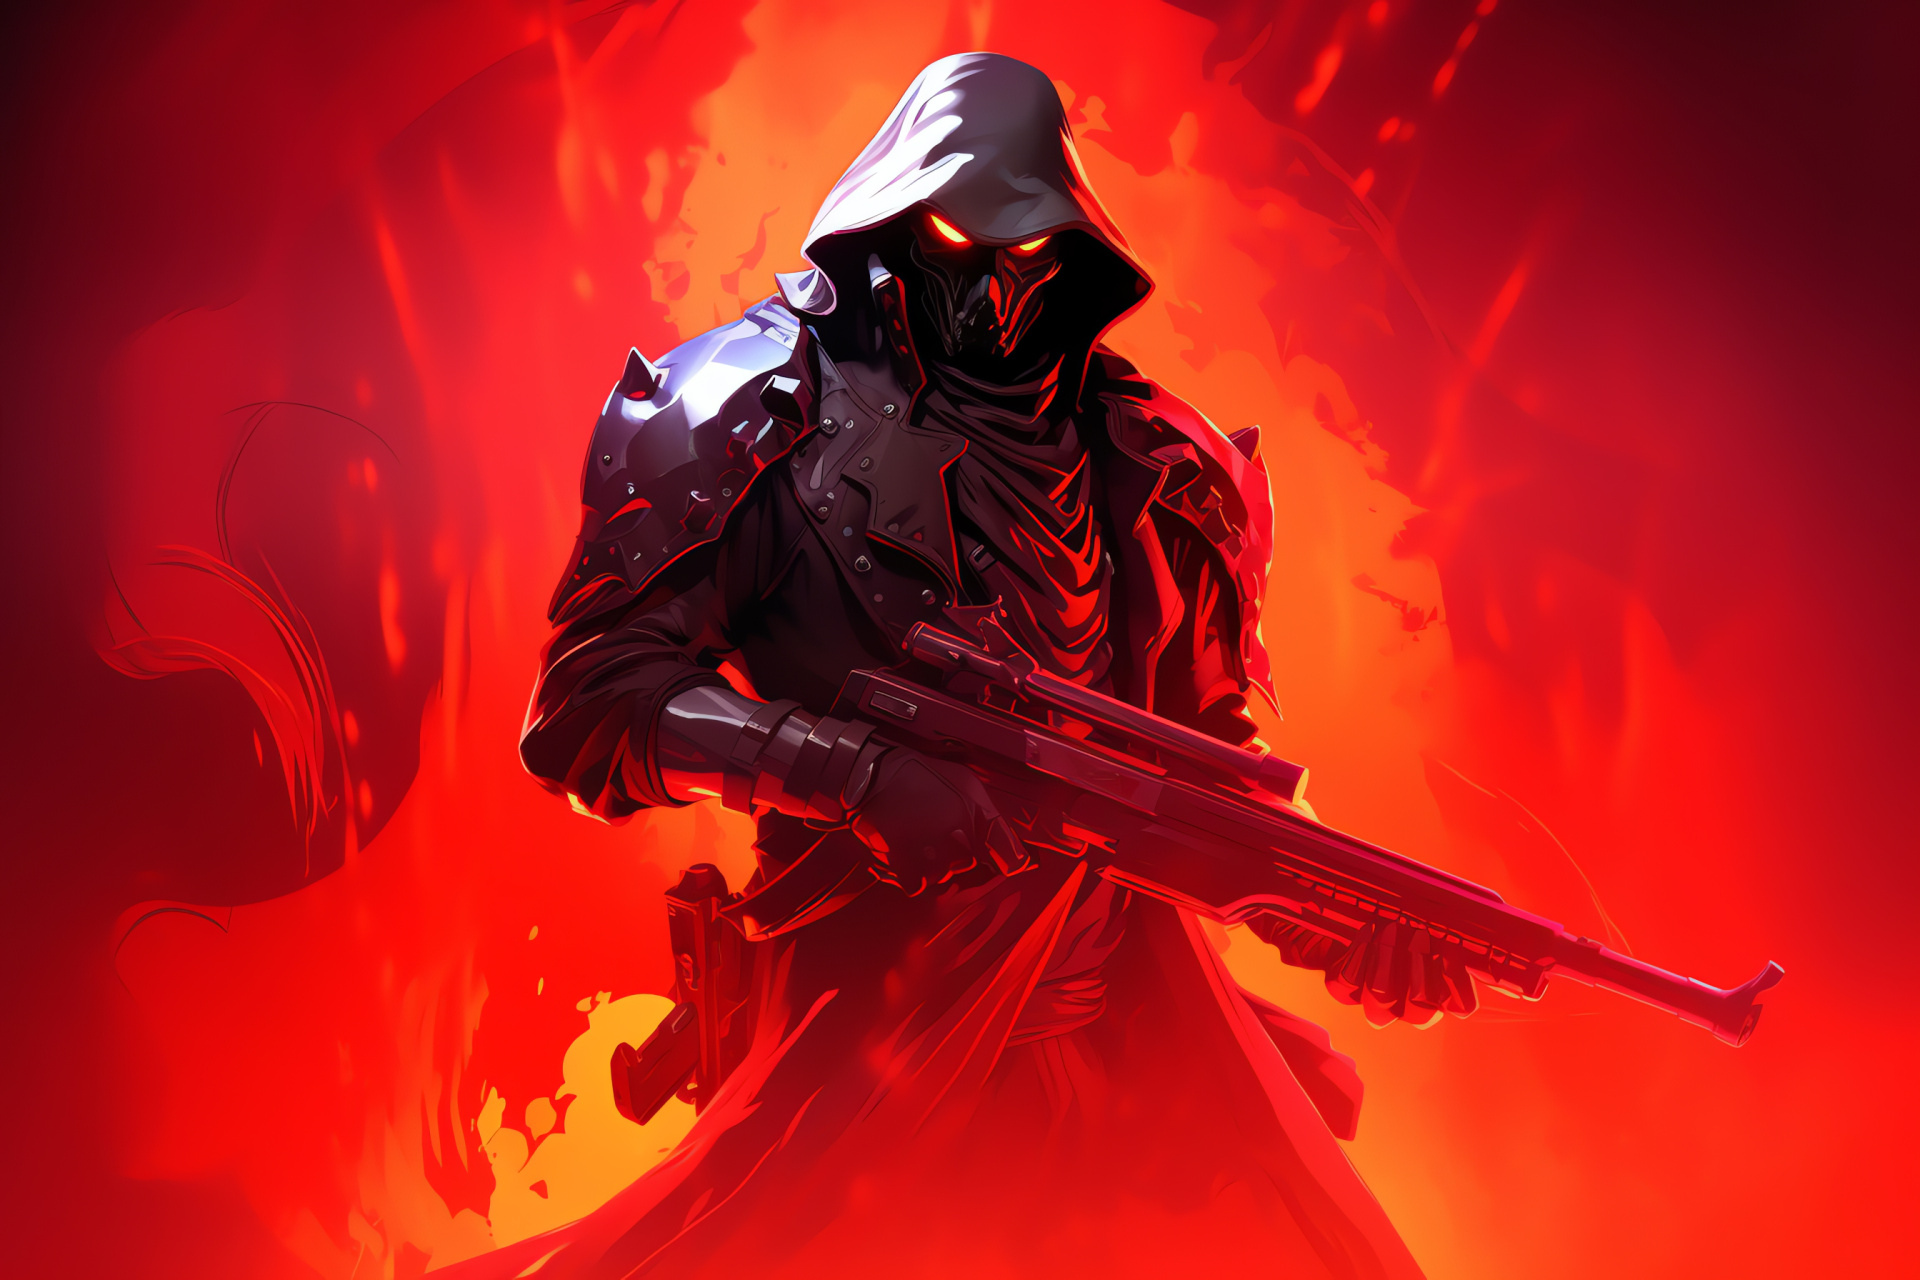 Overwatch game, Wraith-inspired Reaper, Shadowy protagonist, Video game culture, Digital cloak, HD Desktop Image